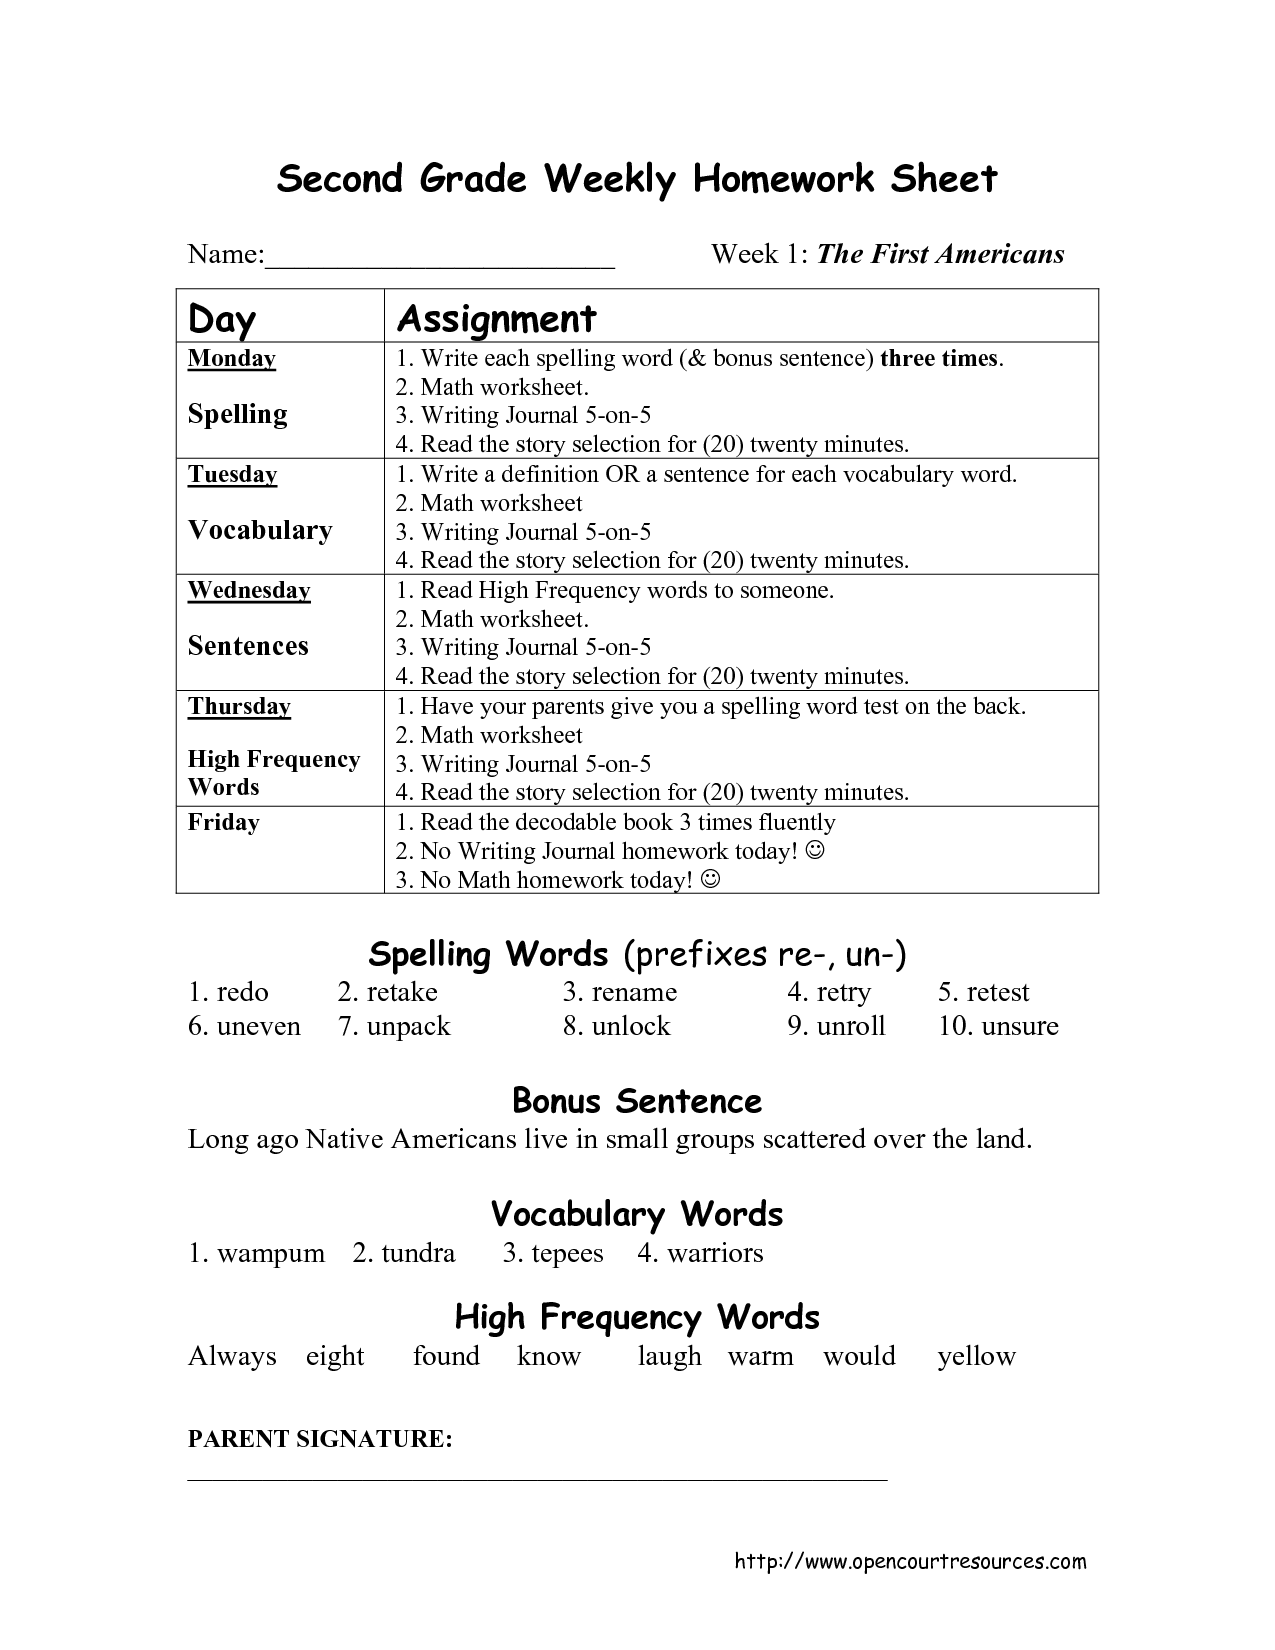 homework sheet for 2nd grade